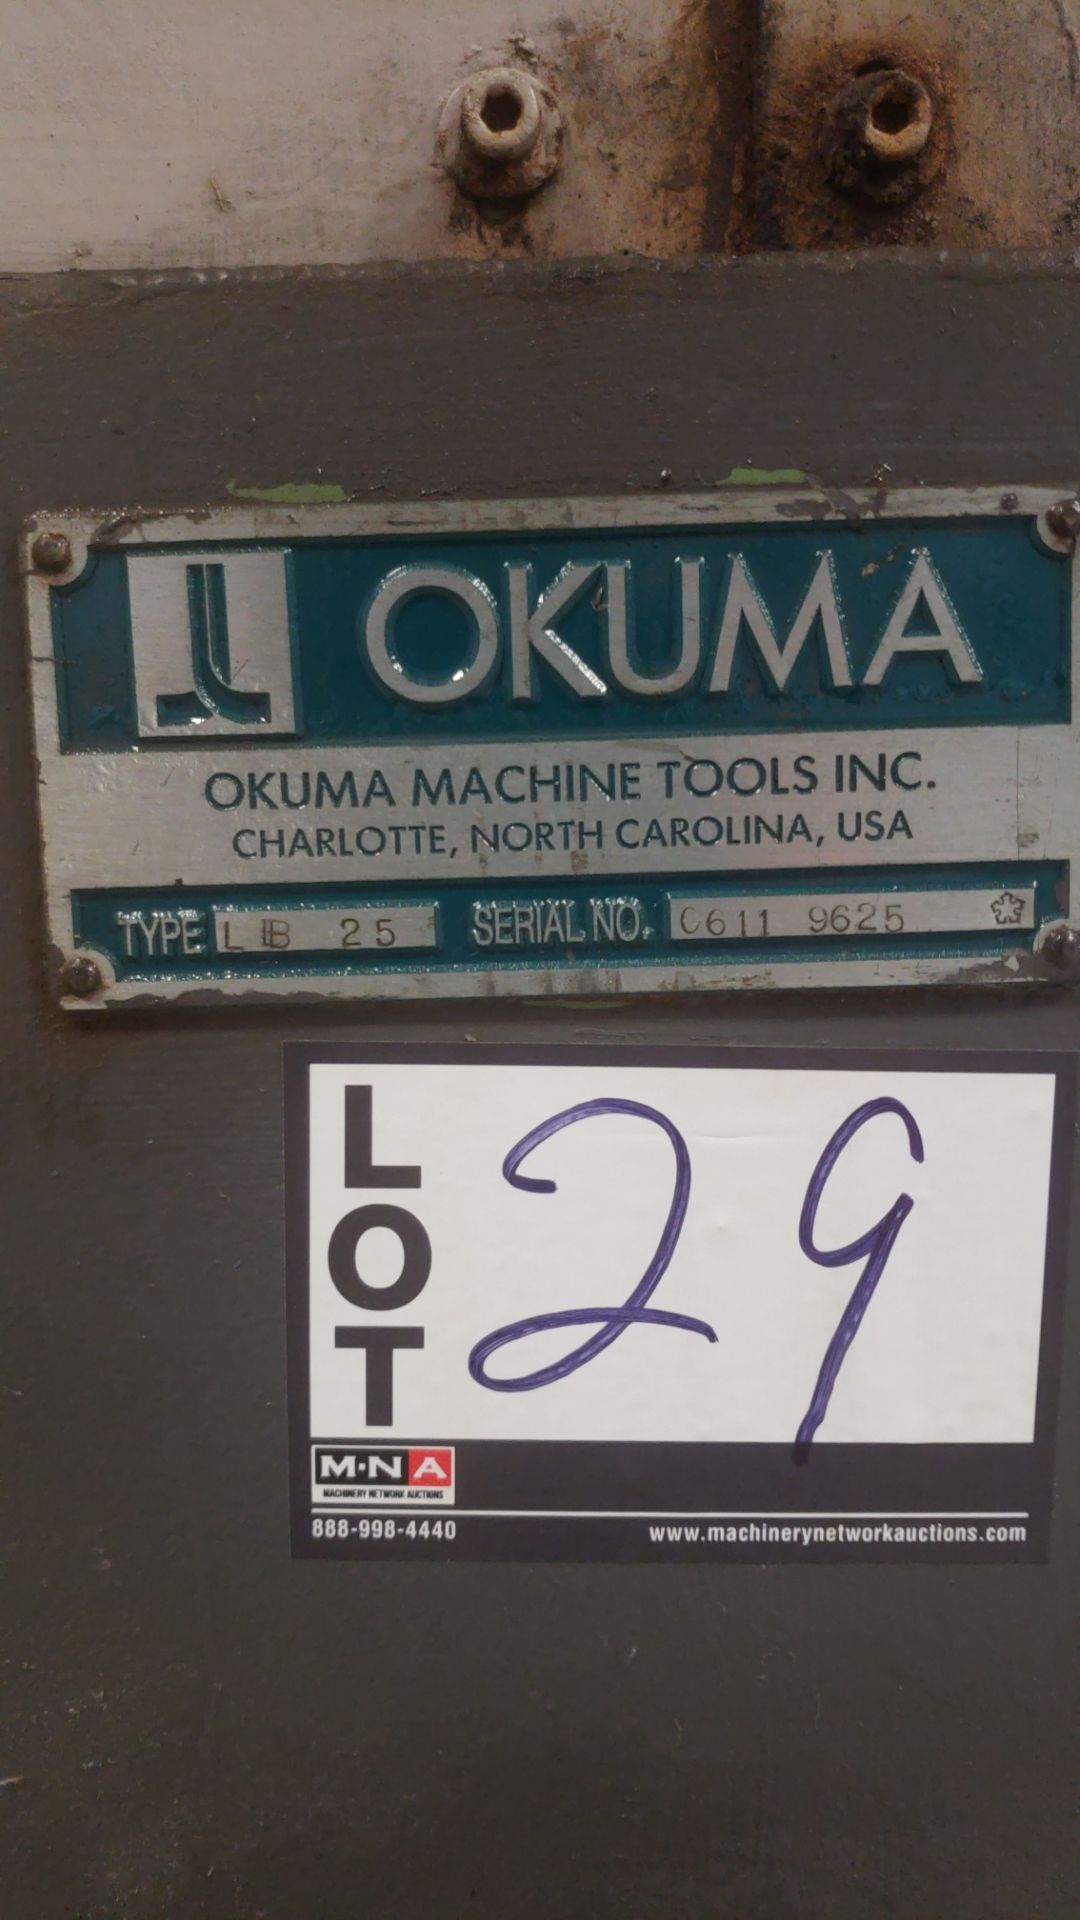 Okuma LB 25 2 Axis CNC lathe, 5020 control, chip conveyor, 10" chuck SN: 06119625 - Image 7 of 7